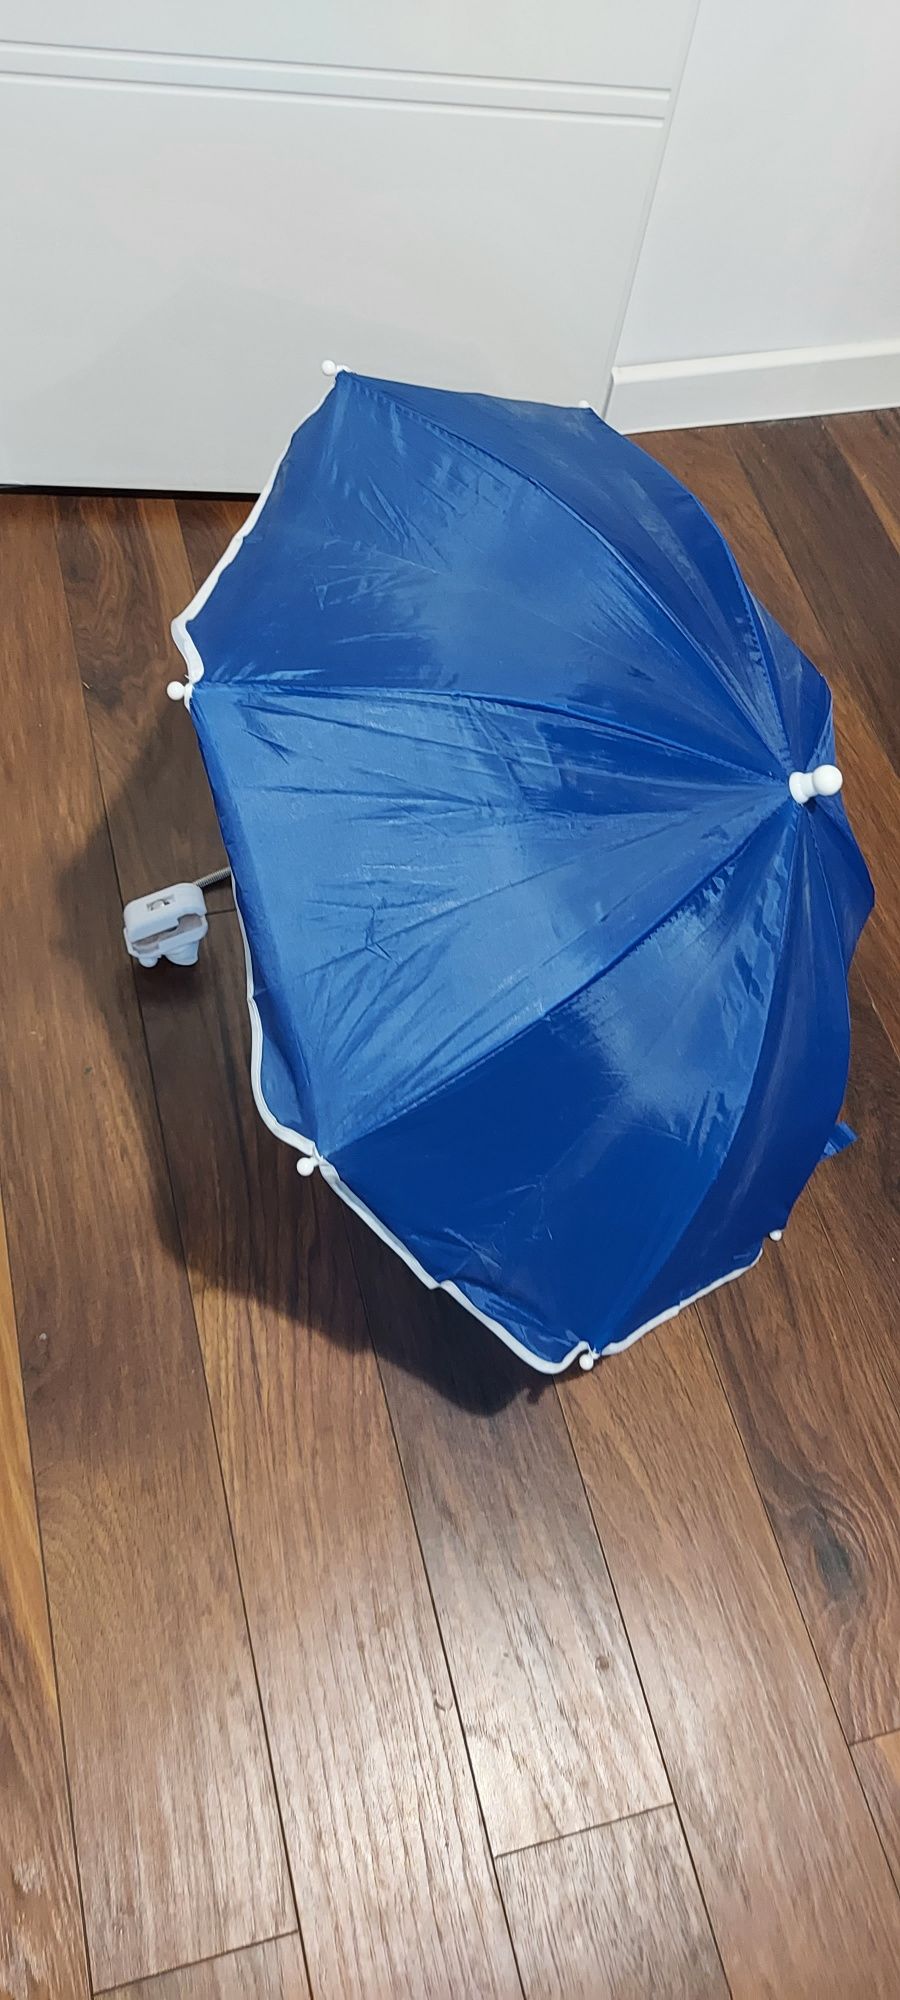 Parasol parasolka do wozka